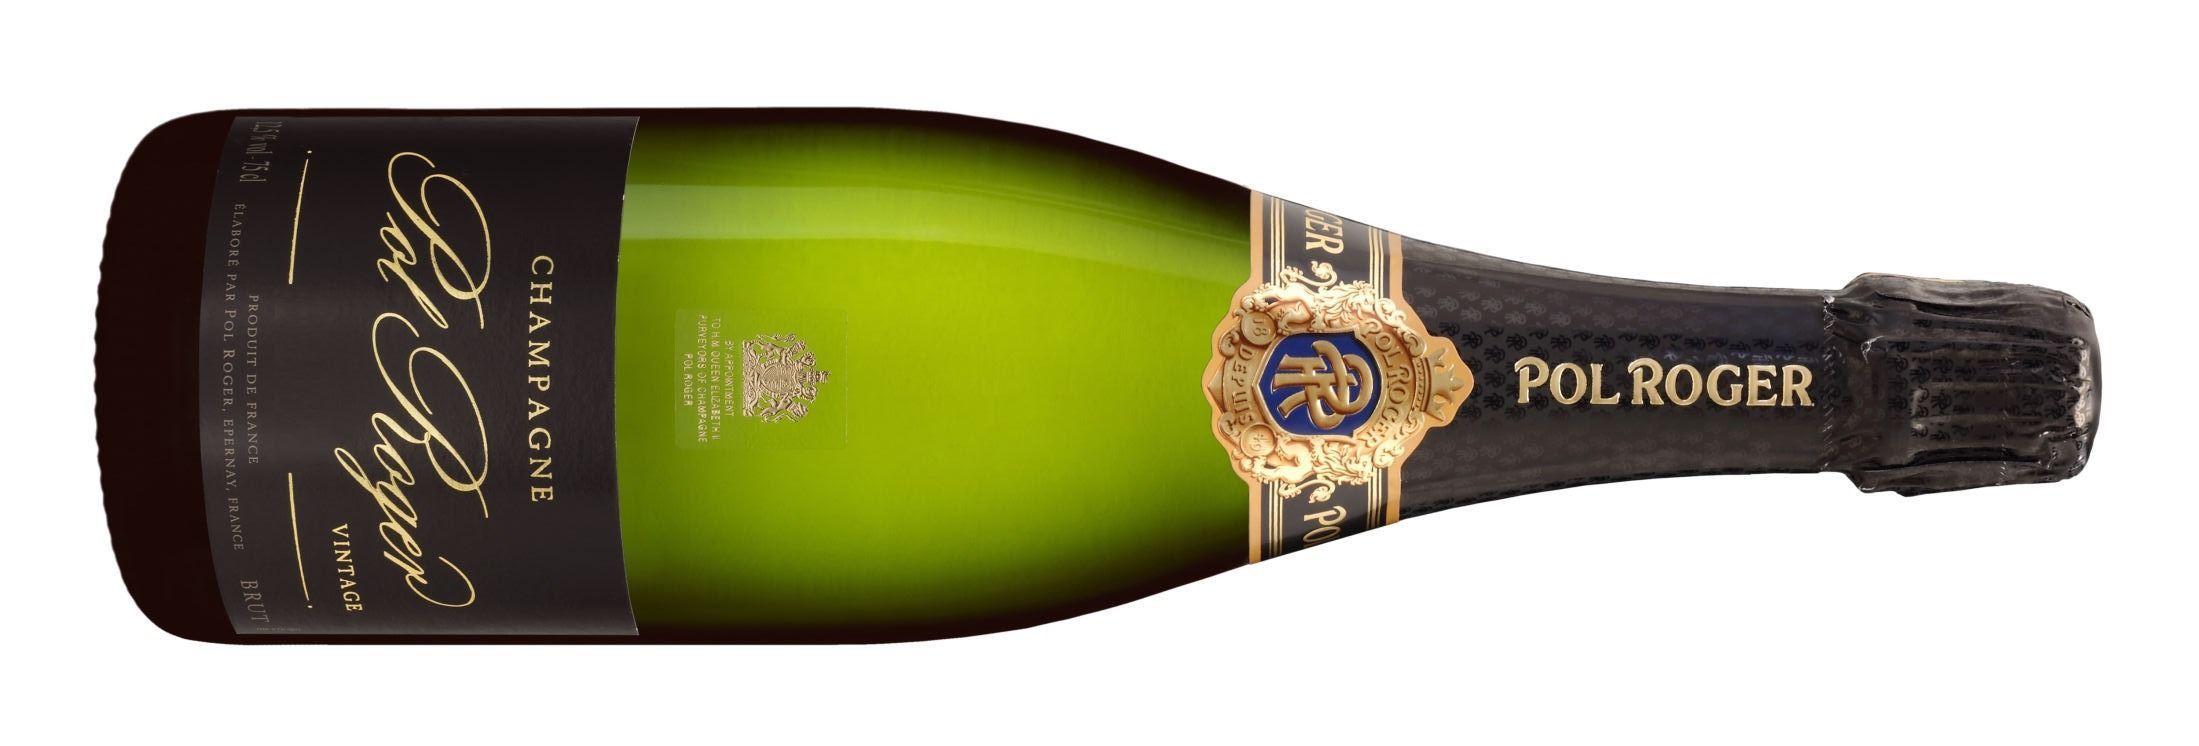 256101 Basisutvalget, kategori 5, Poeng: 91, Land/region: Frankrike, Champagne